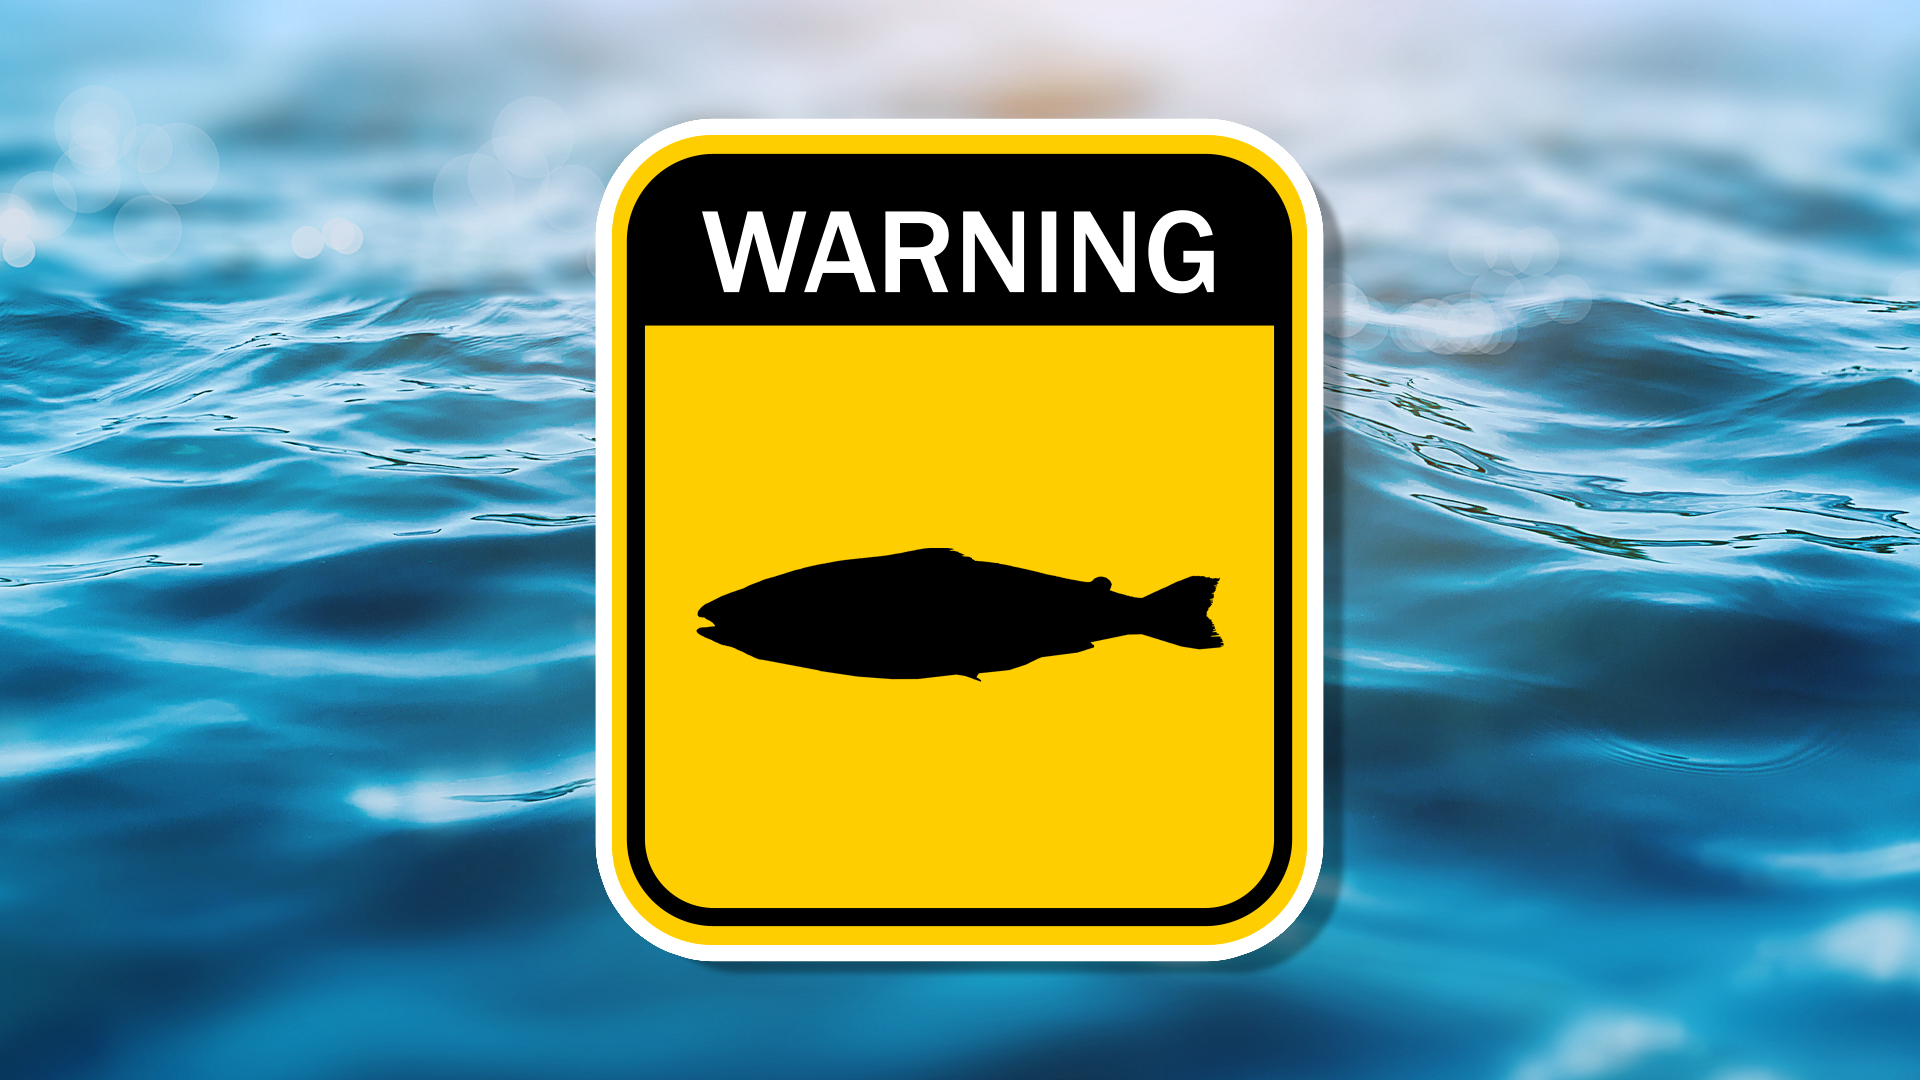 Poison fish warning sign